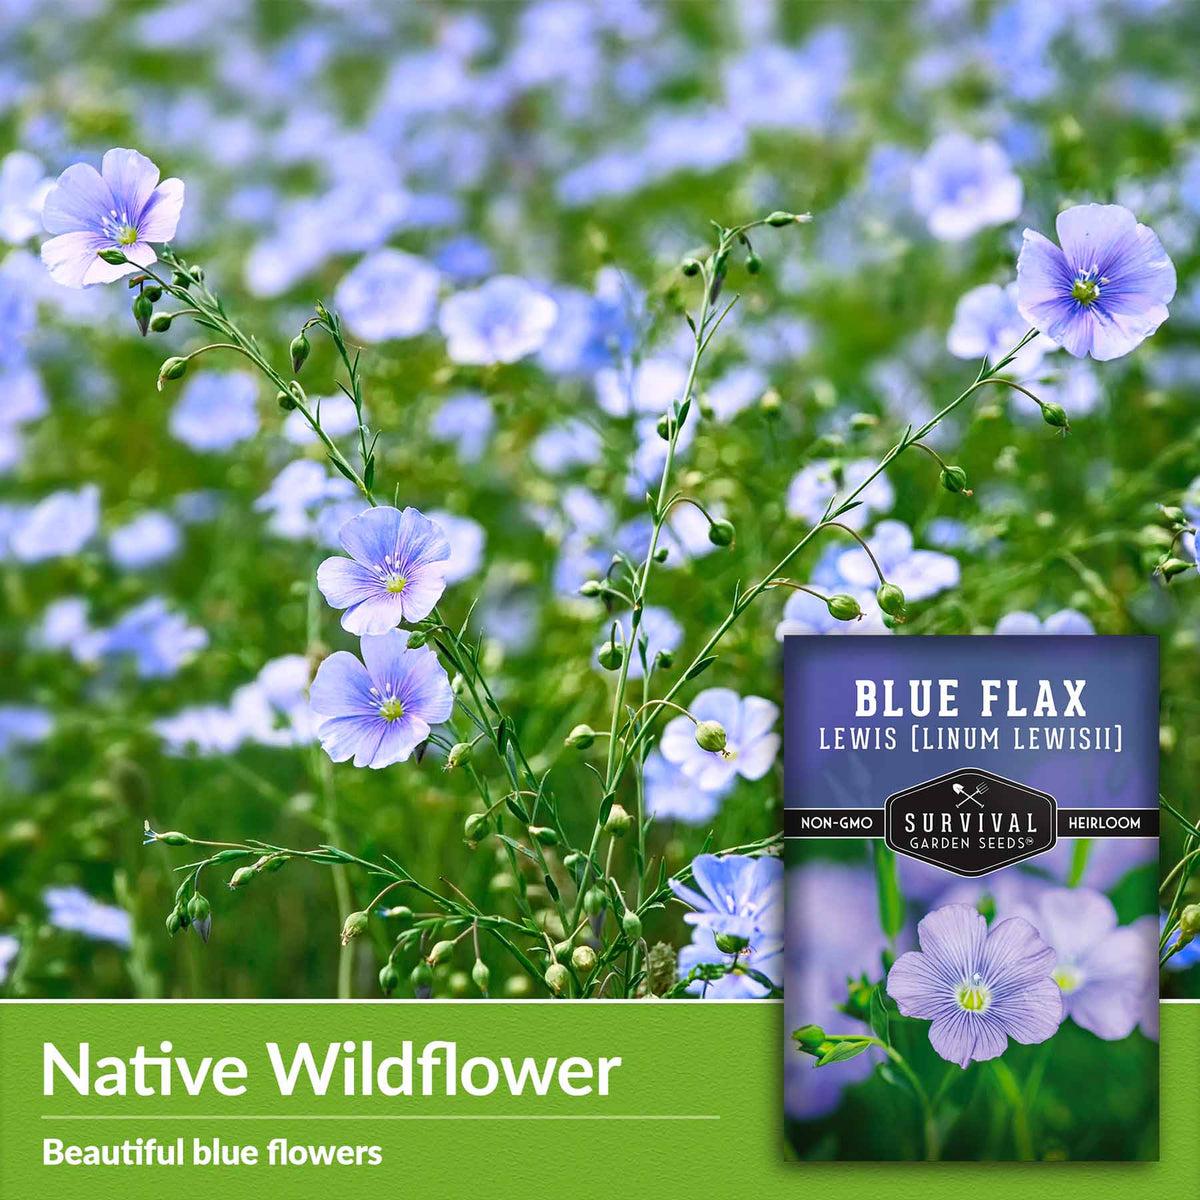 Native wildflower - beautiful blue flowers